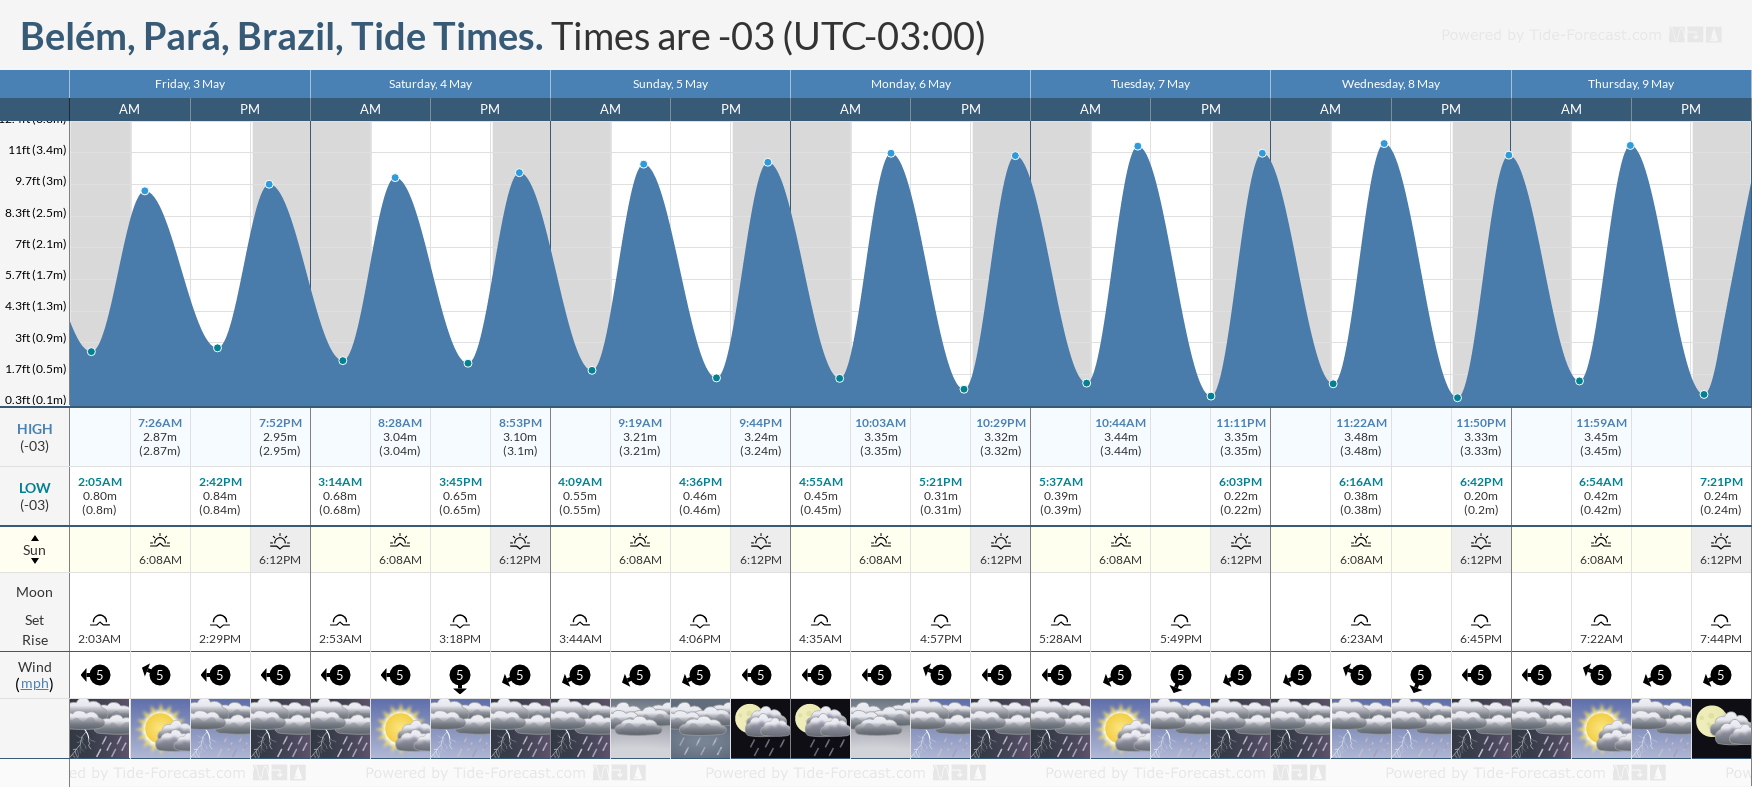 Belém, Pará, Brazil Tide Chart including high and low tide times for the next 7 days